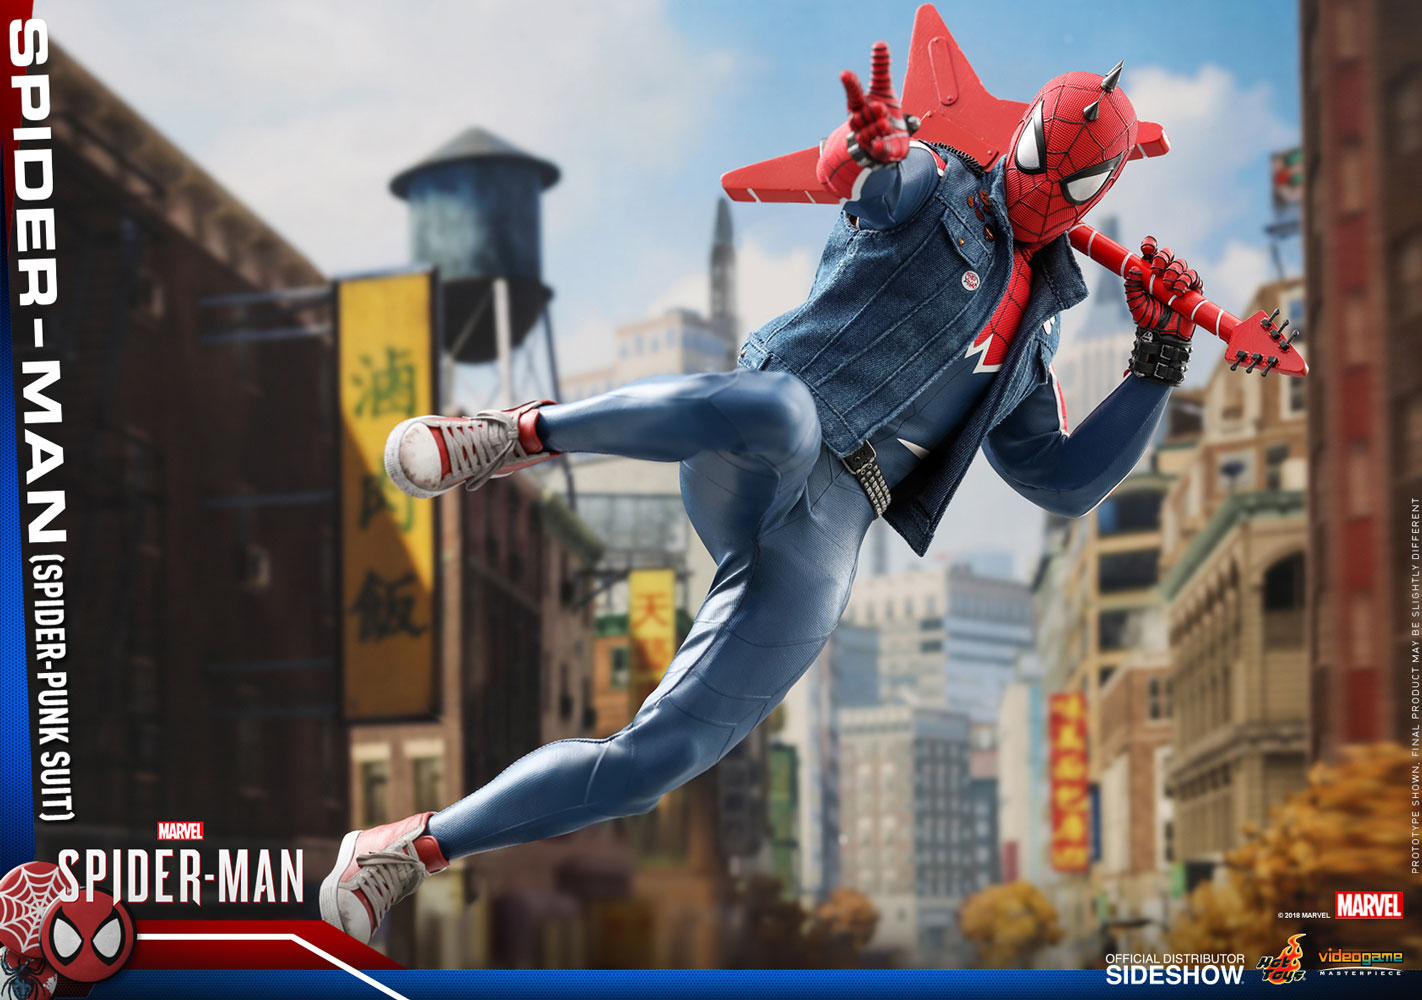 SpiderMan (Spider-Punk) Suit